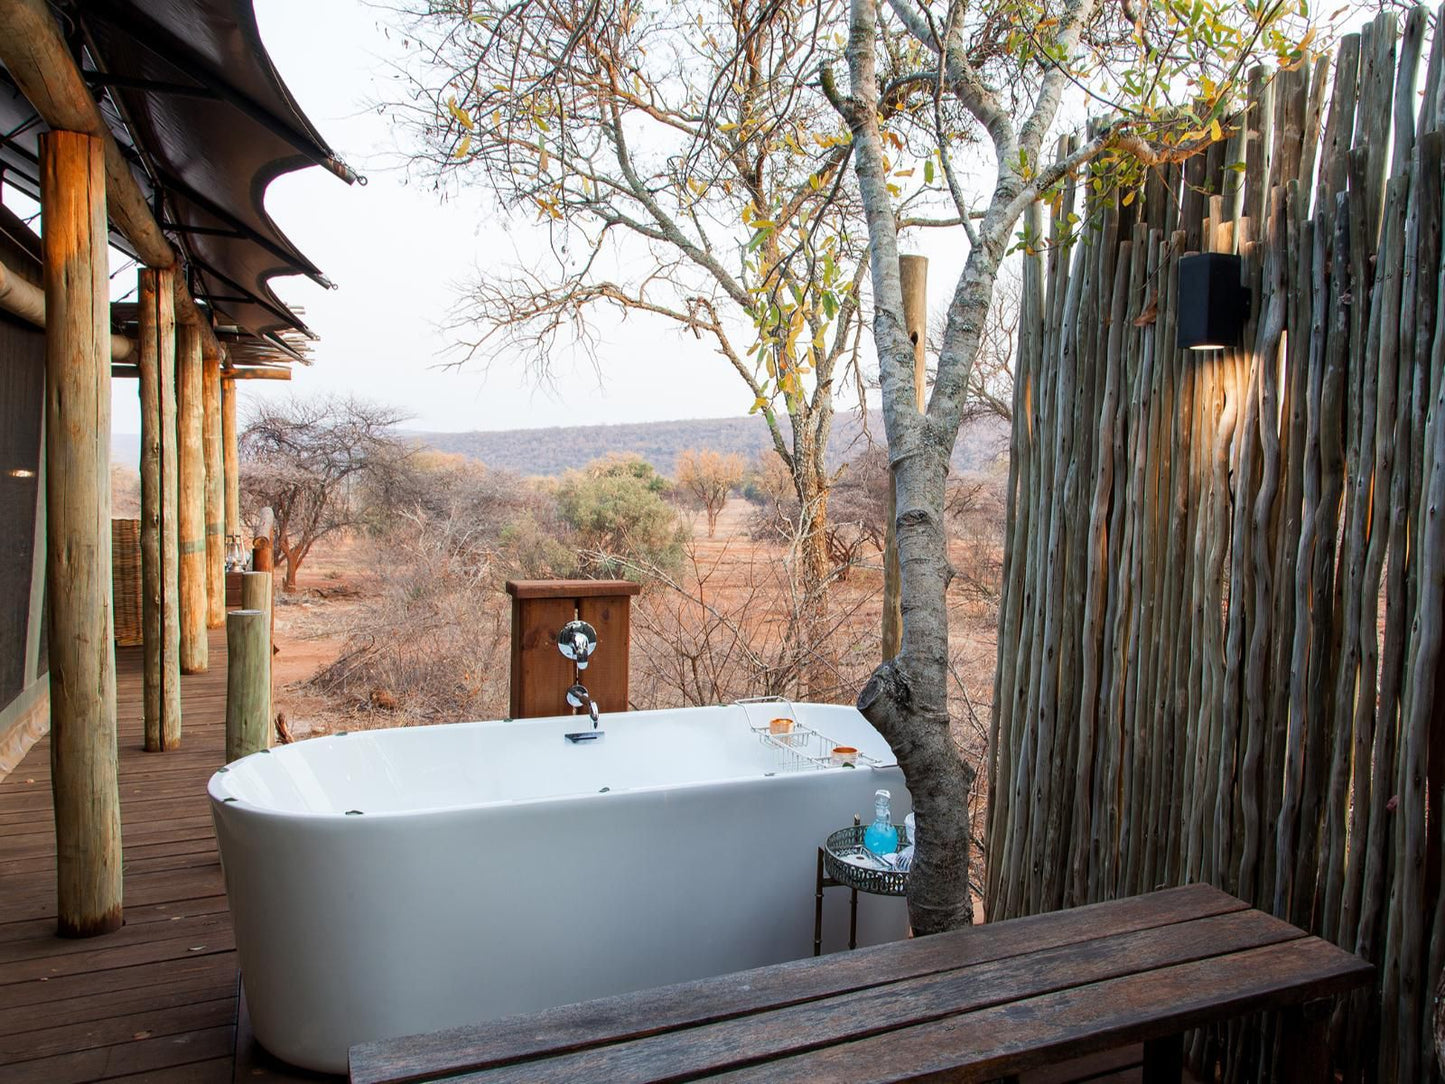 Tintswalo Lapalala Waterberg Limpopo Province South Africa Bathroom